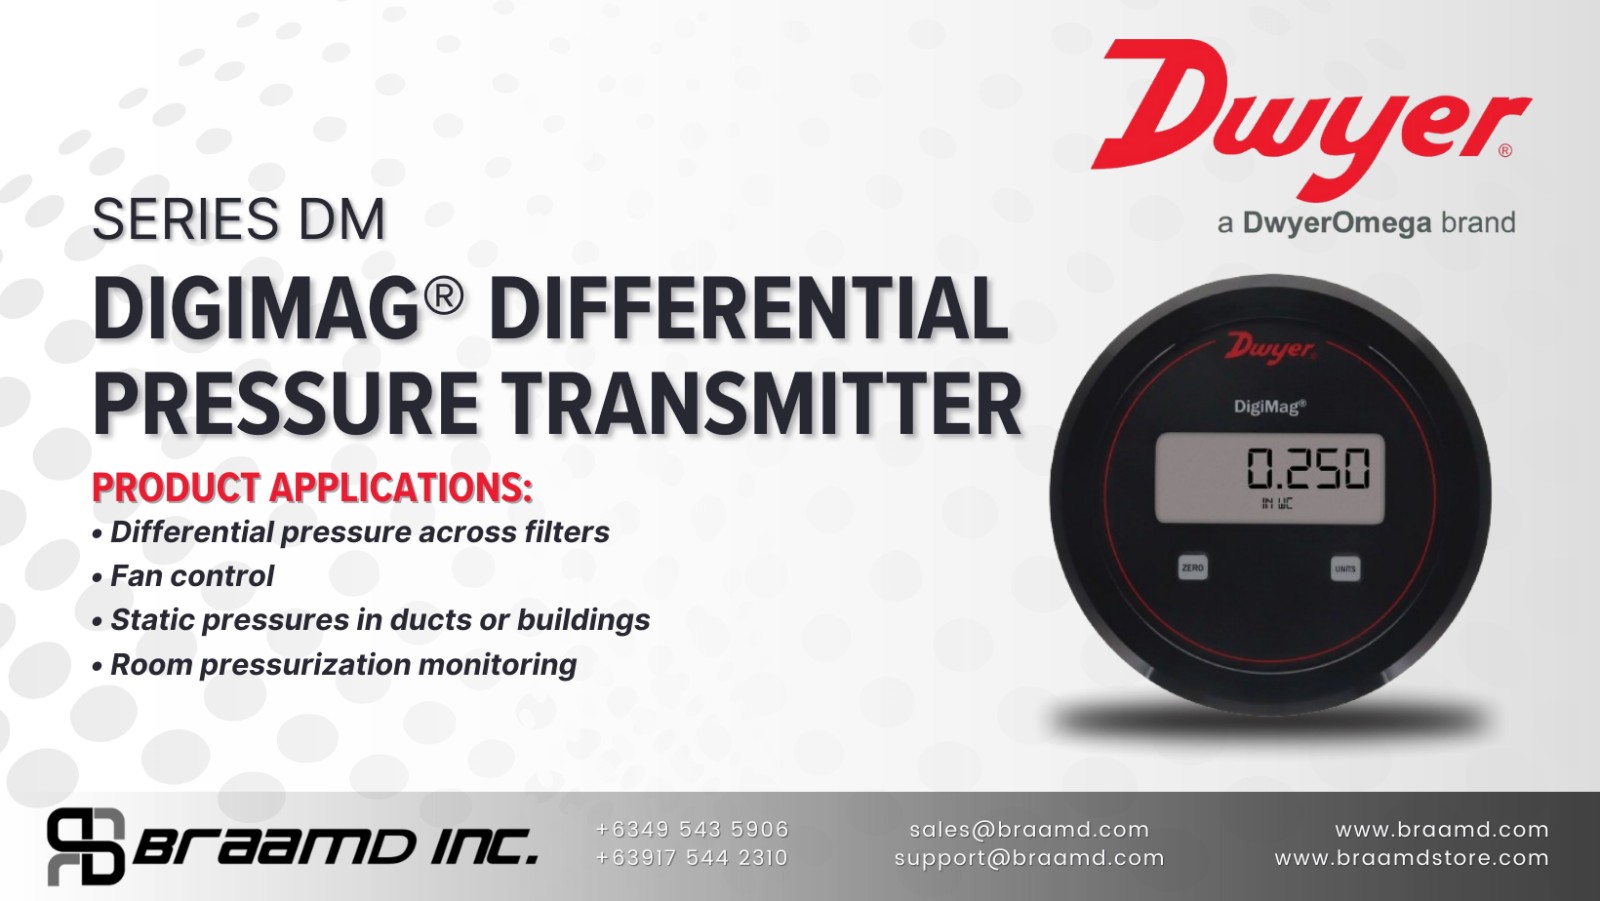 The Digimag® Differential Pressure Transmitter